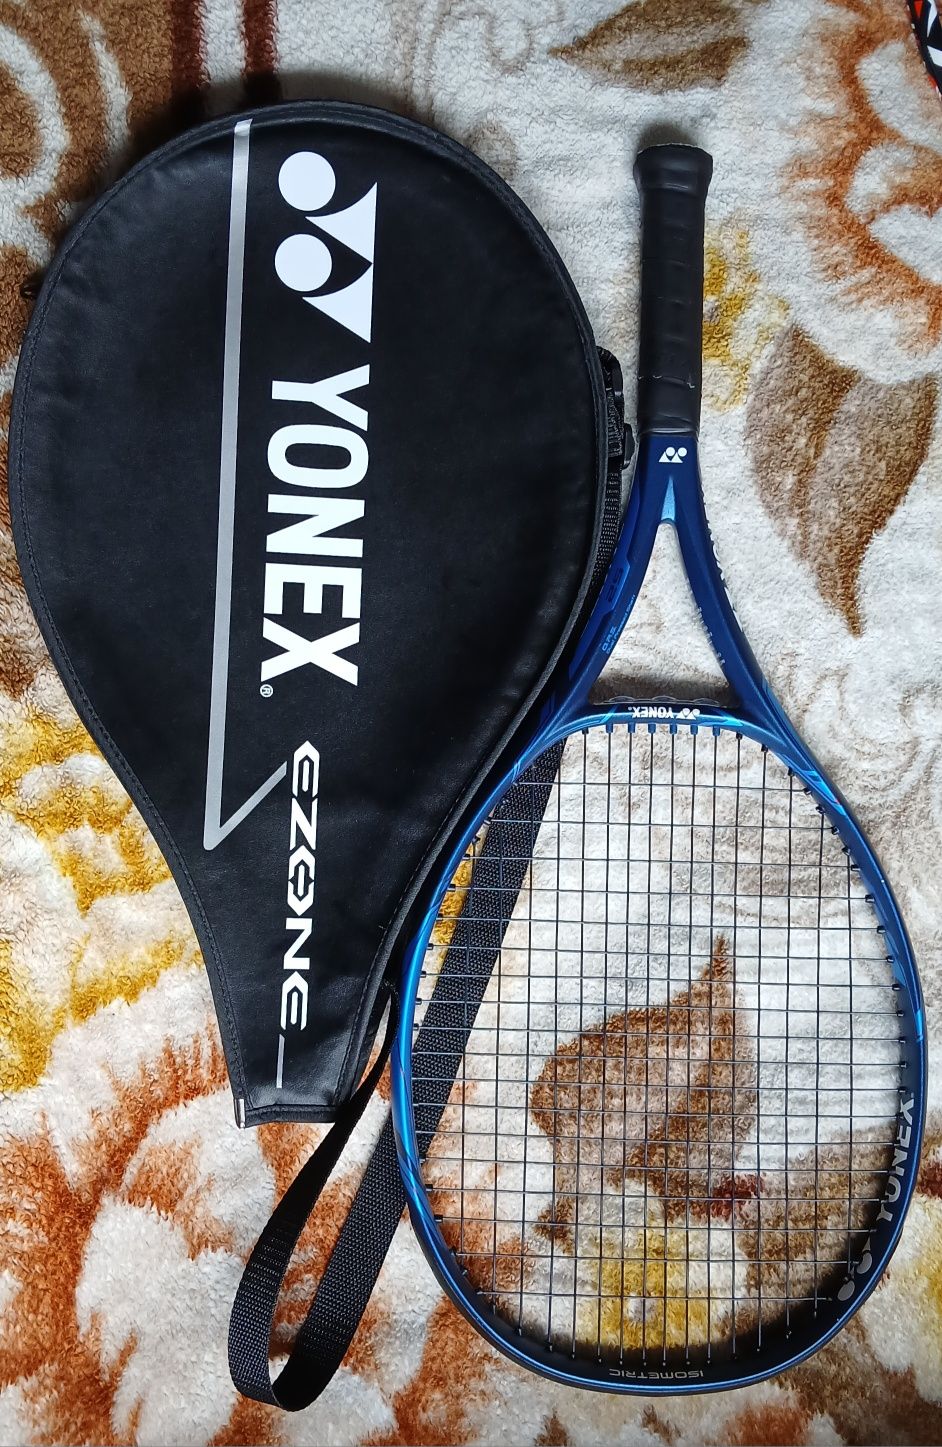 Racheta tenis Yonex cu husa, copii 7-9 ani